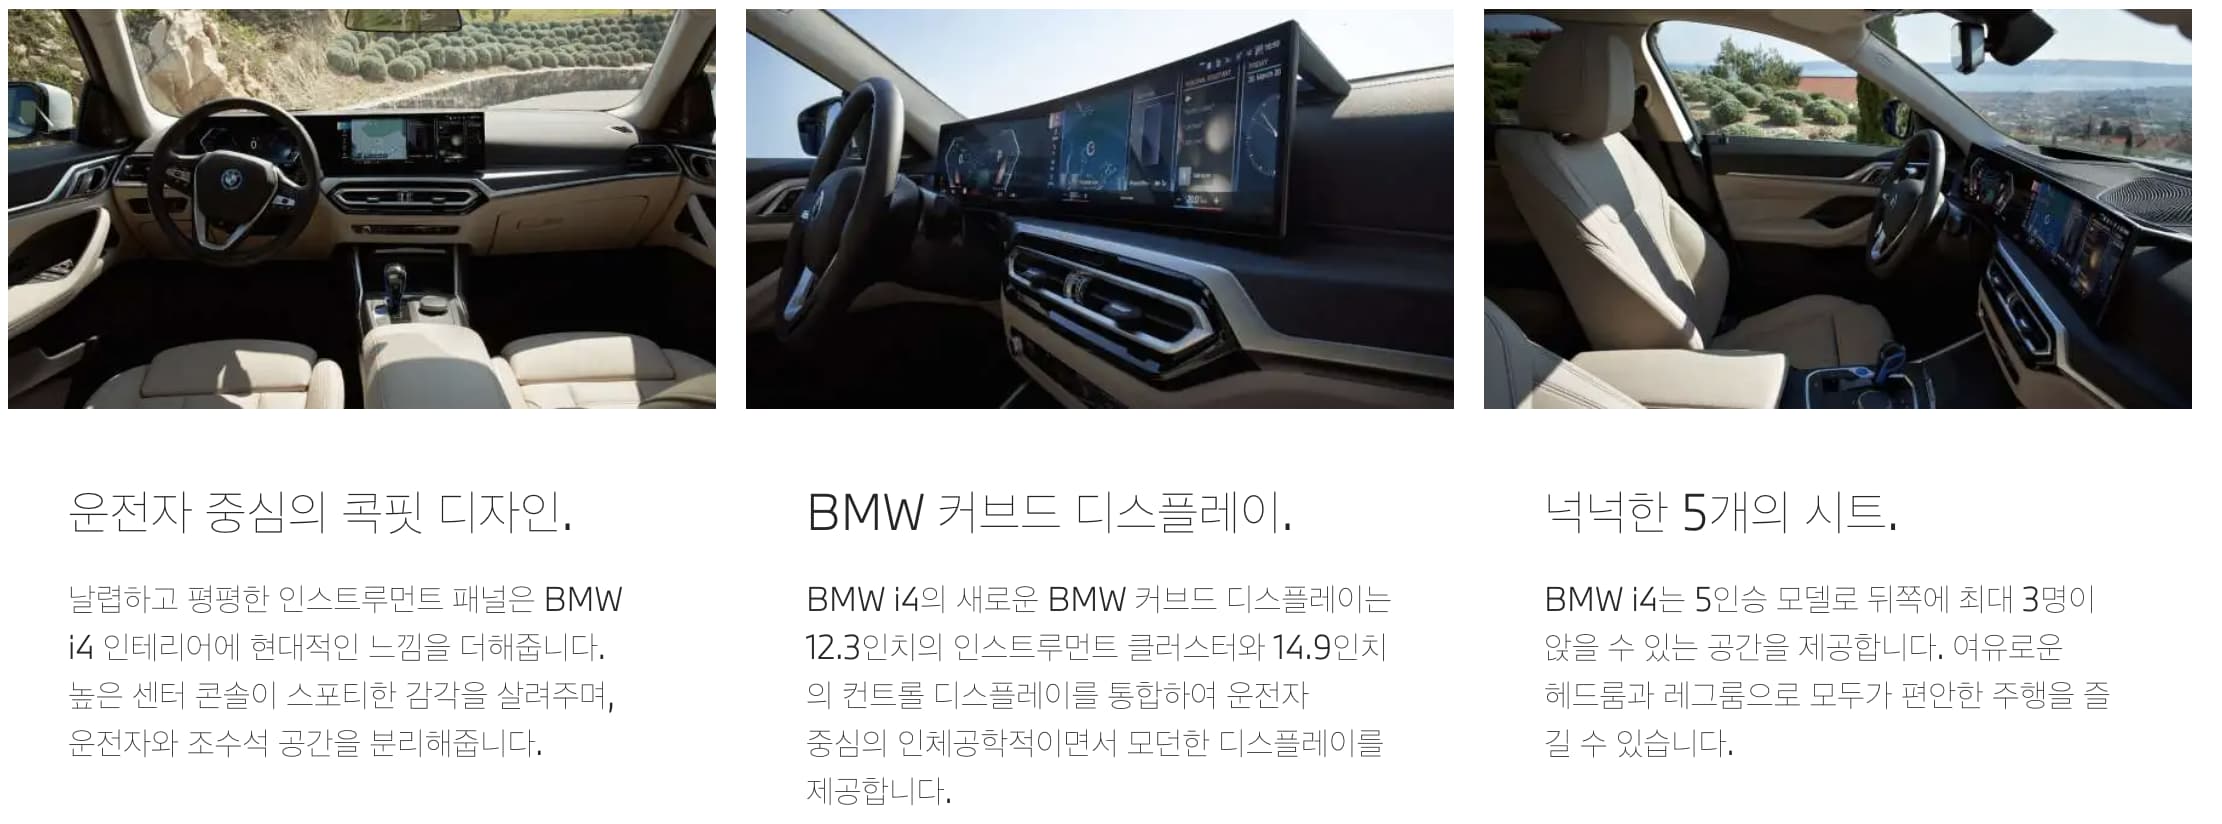 BMW i4모델의 내부 인테리어